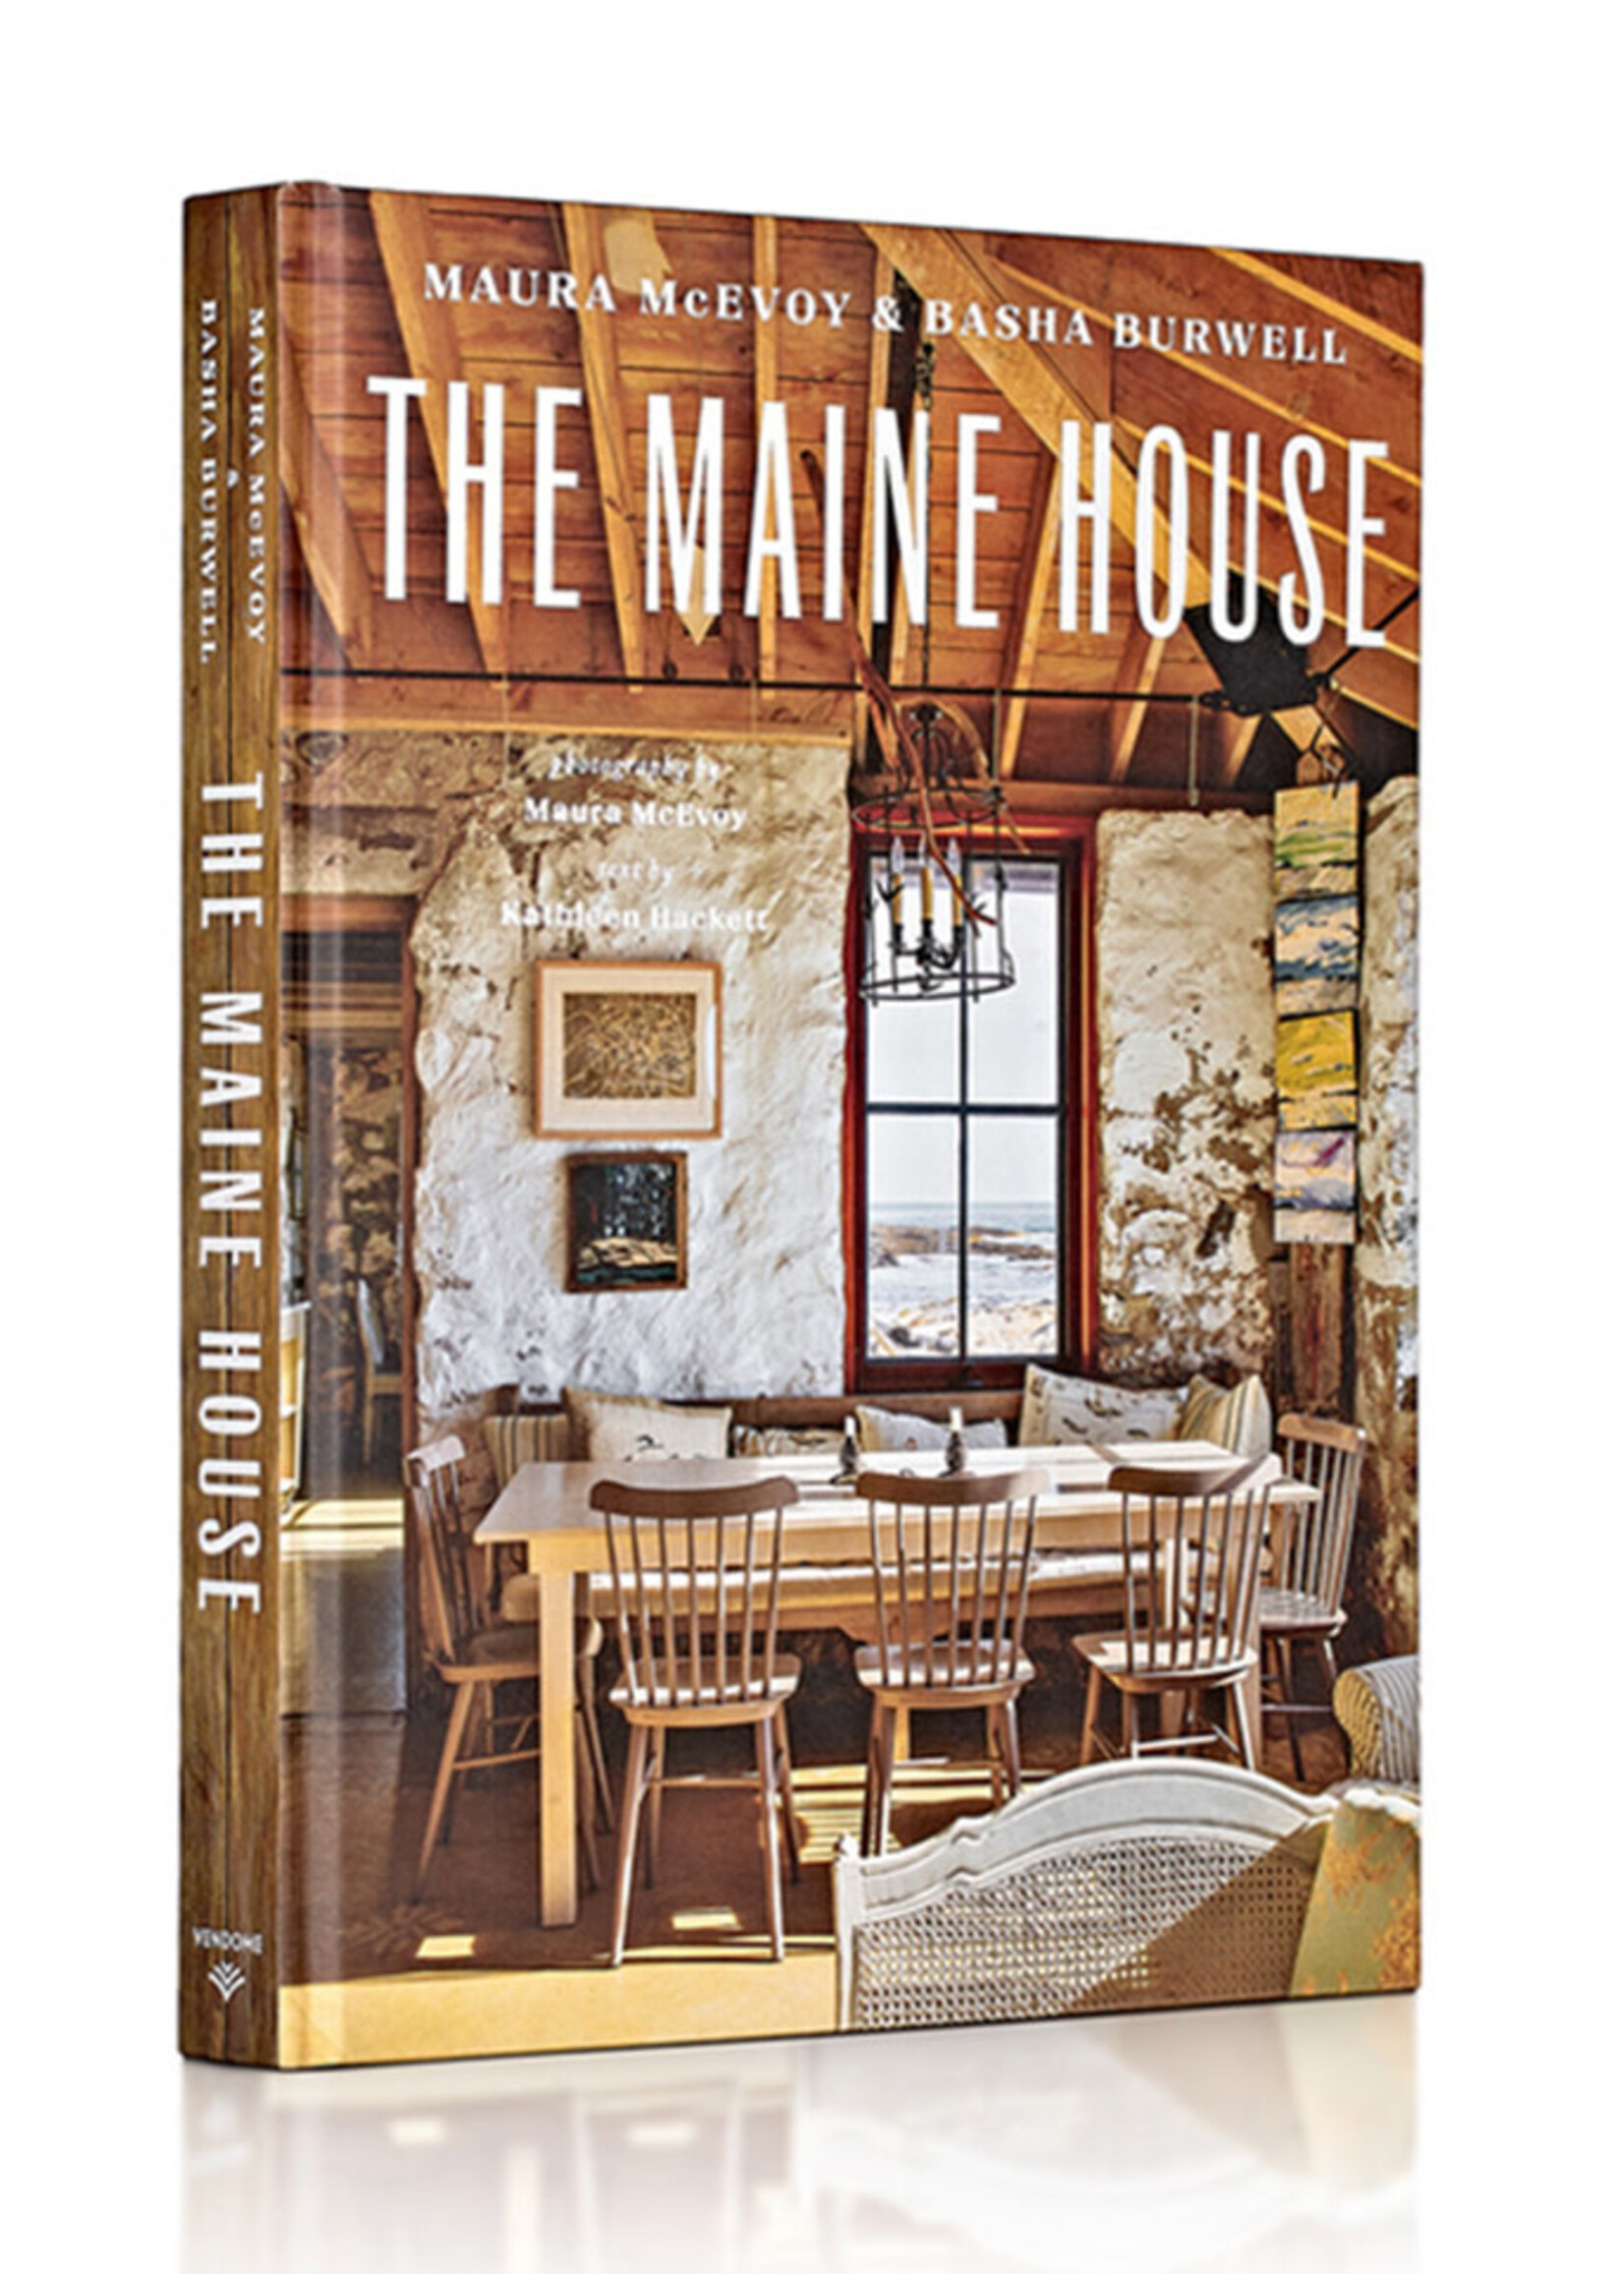 The Maine House by Maura McEvoy and Basha Burwell